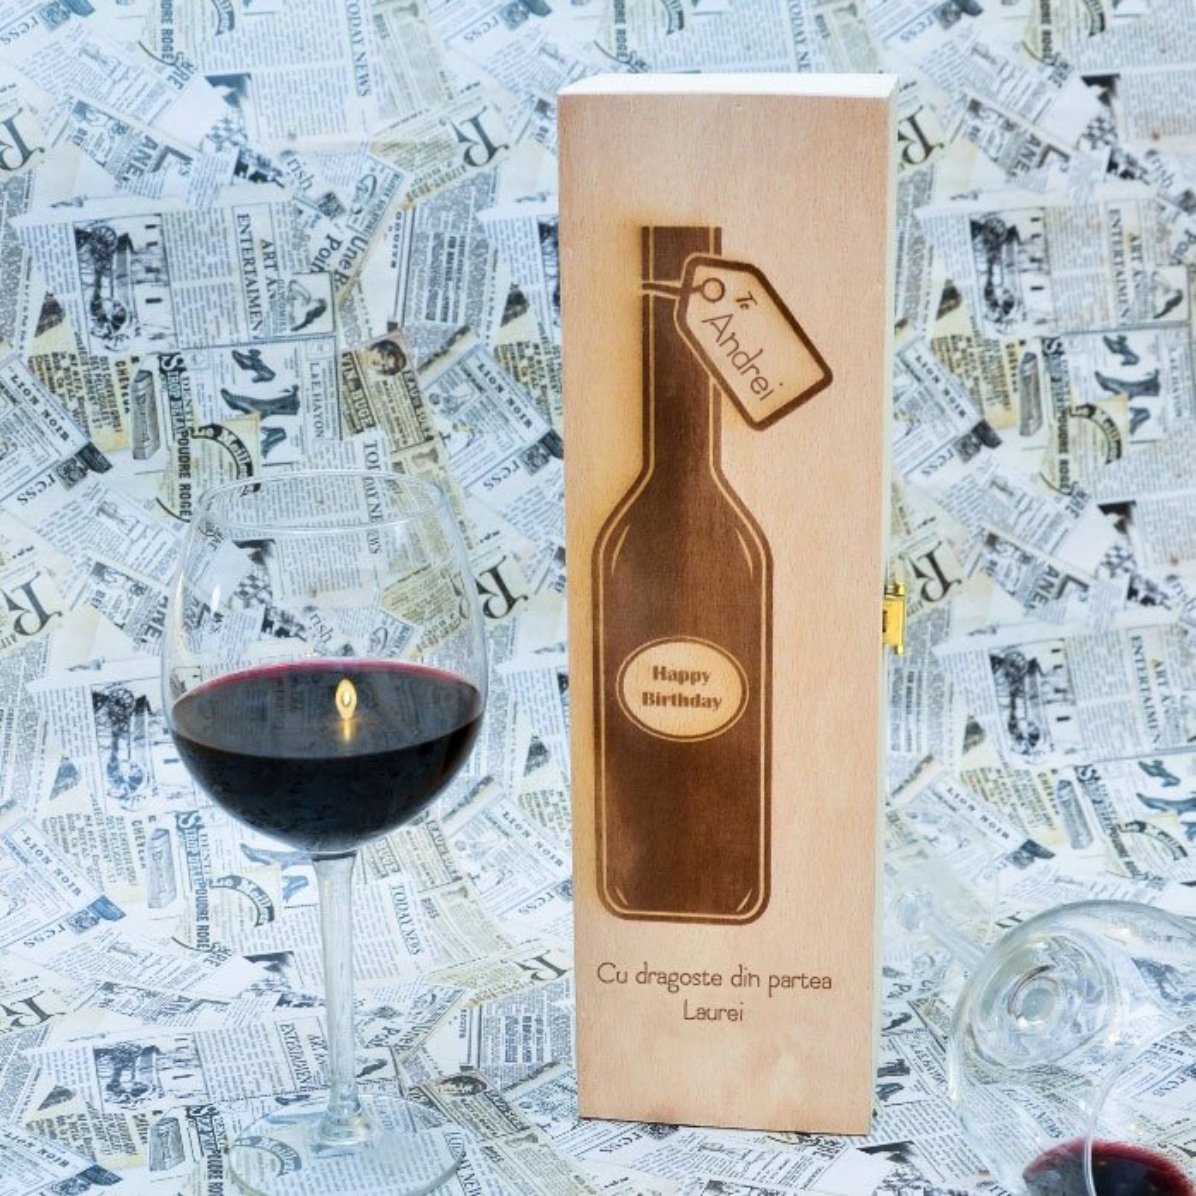 Cutie de vin personalizată cu nume și mesaj - Happy Birthday